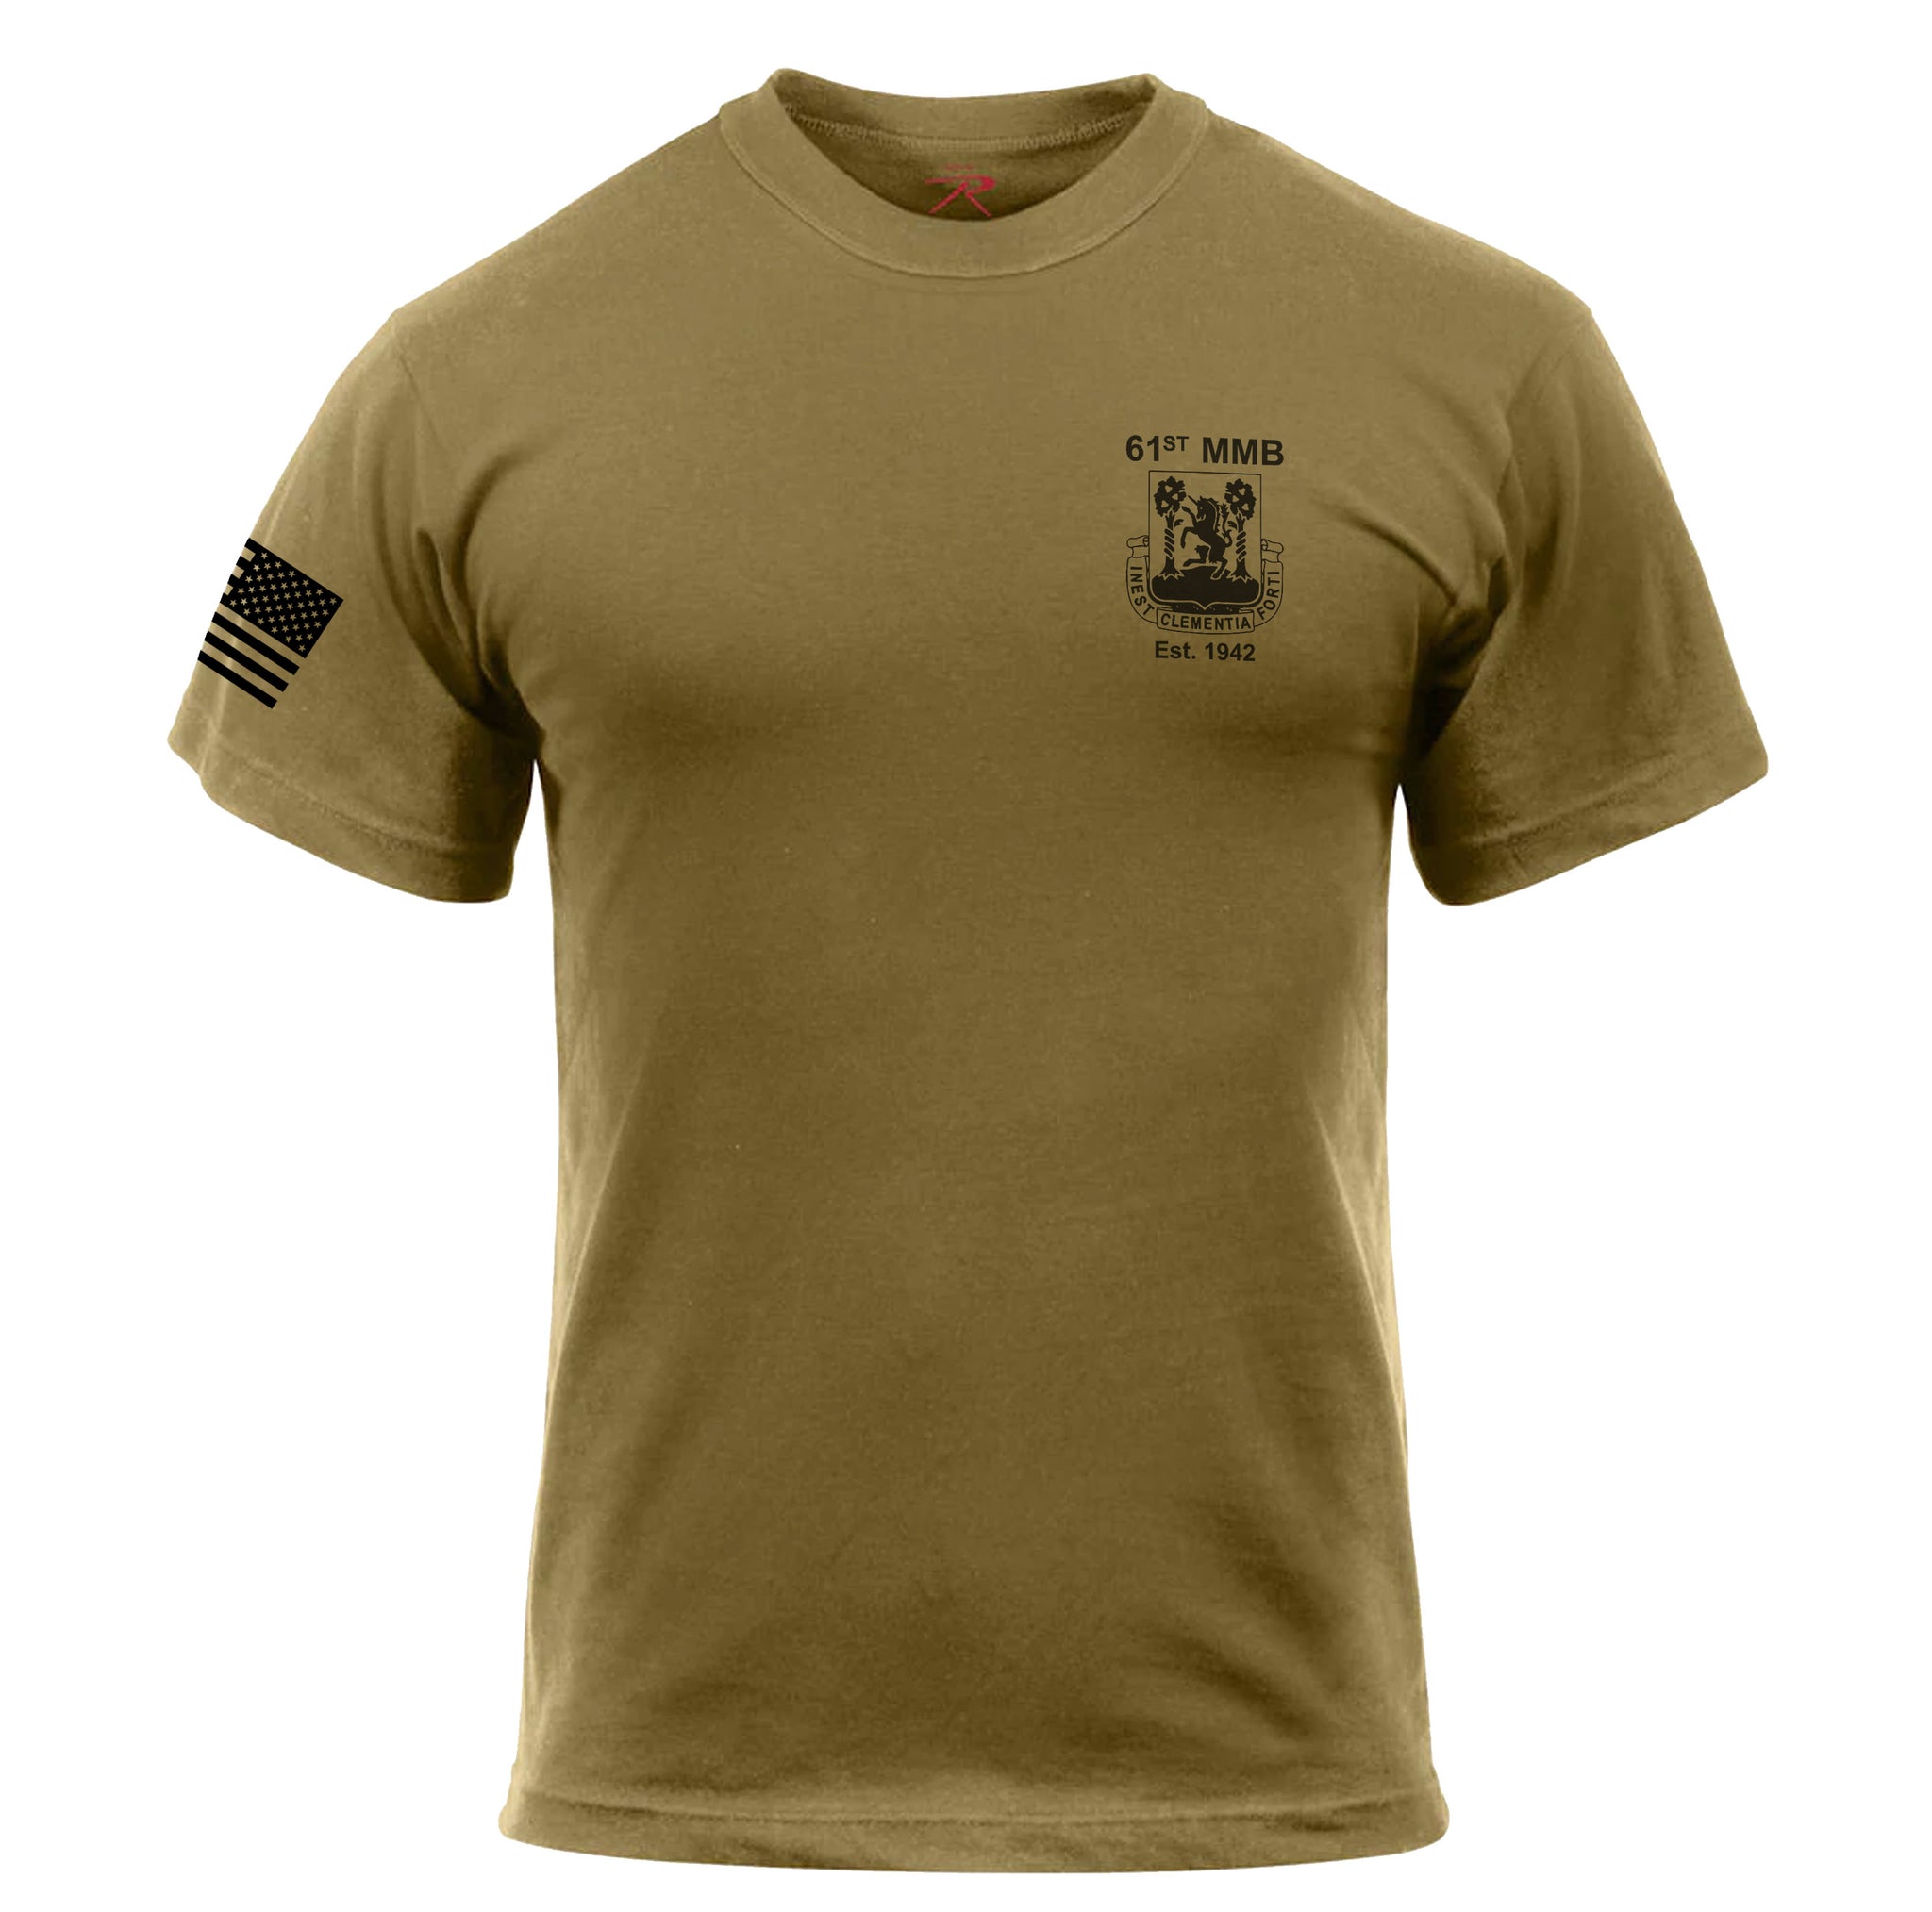 61st MMB OCP Shirt